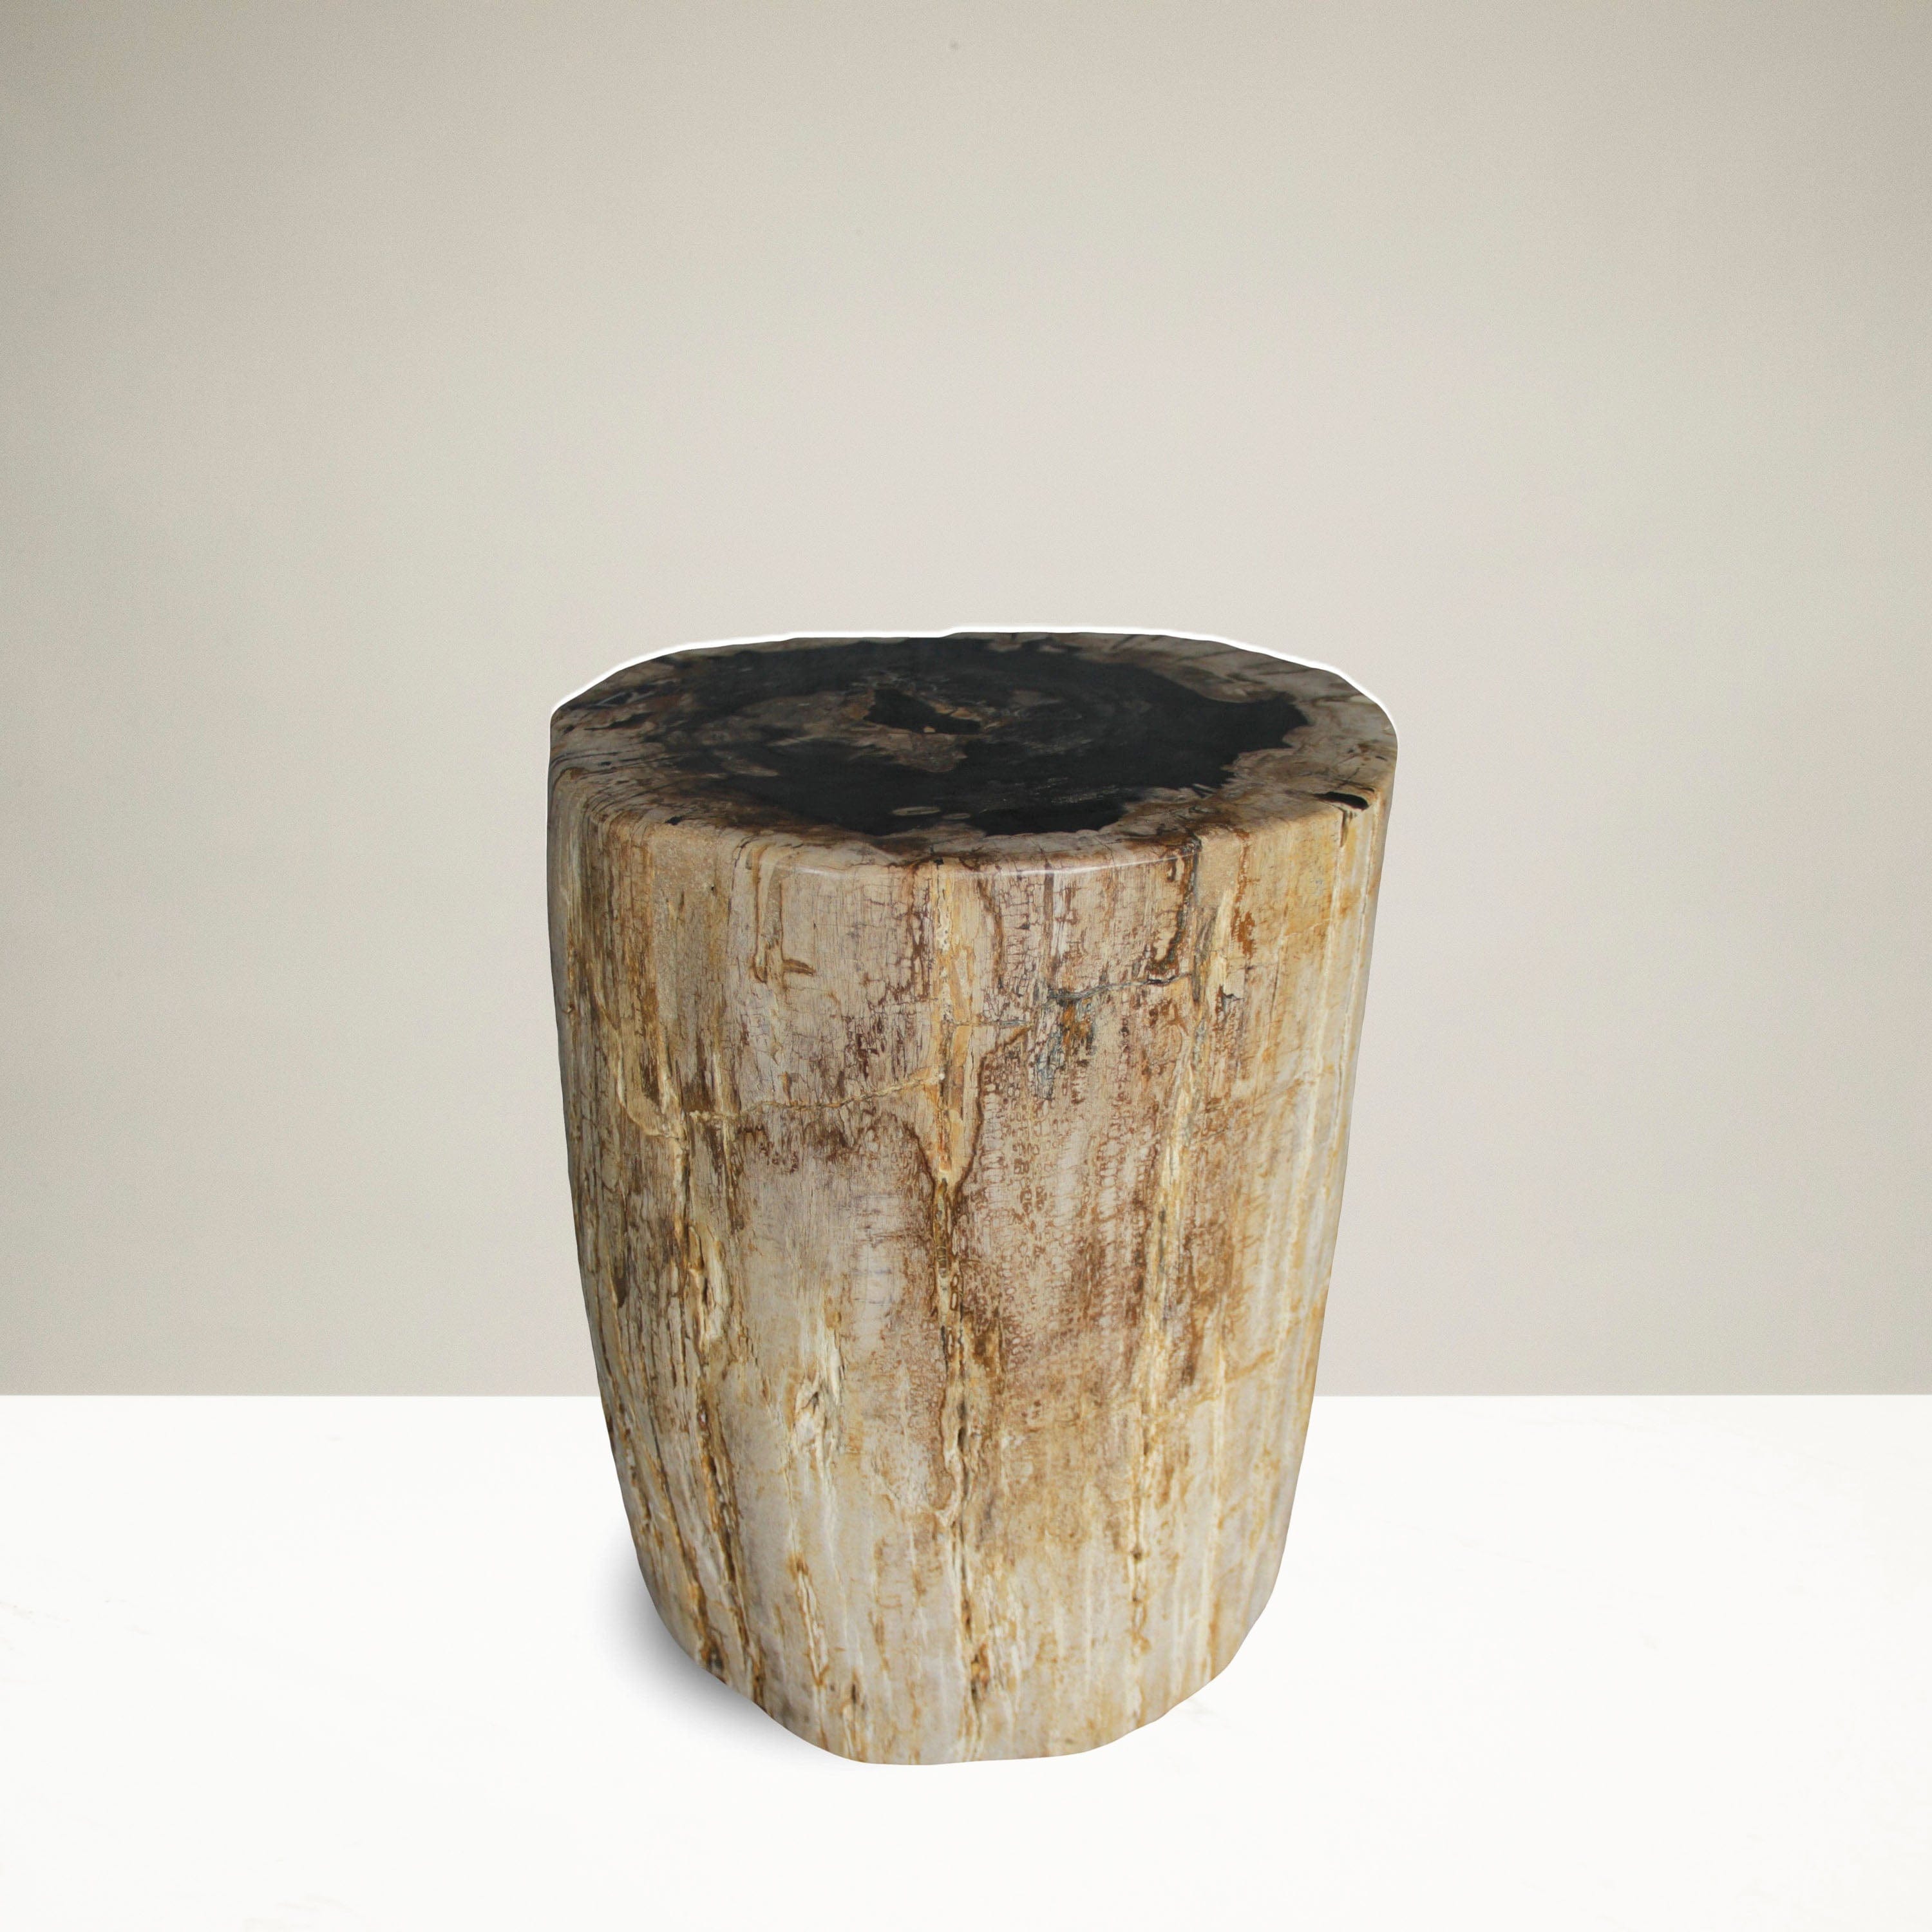 Kalifano Petrified Wood Petrified Wood Round Stump / Stool from Indonesia - 18" / 266 lbs PWS5000.003